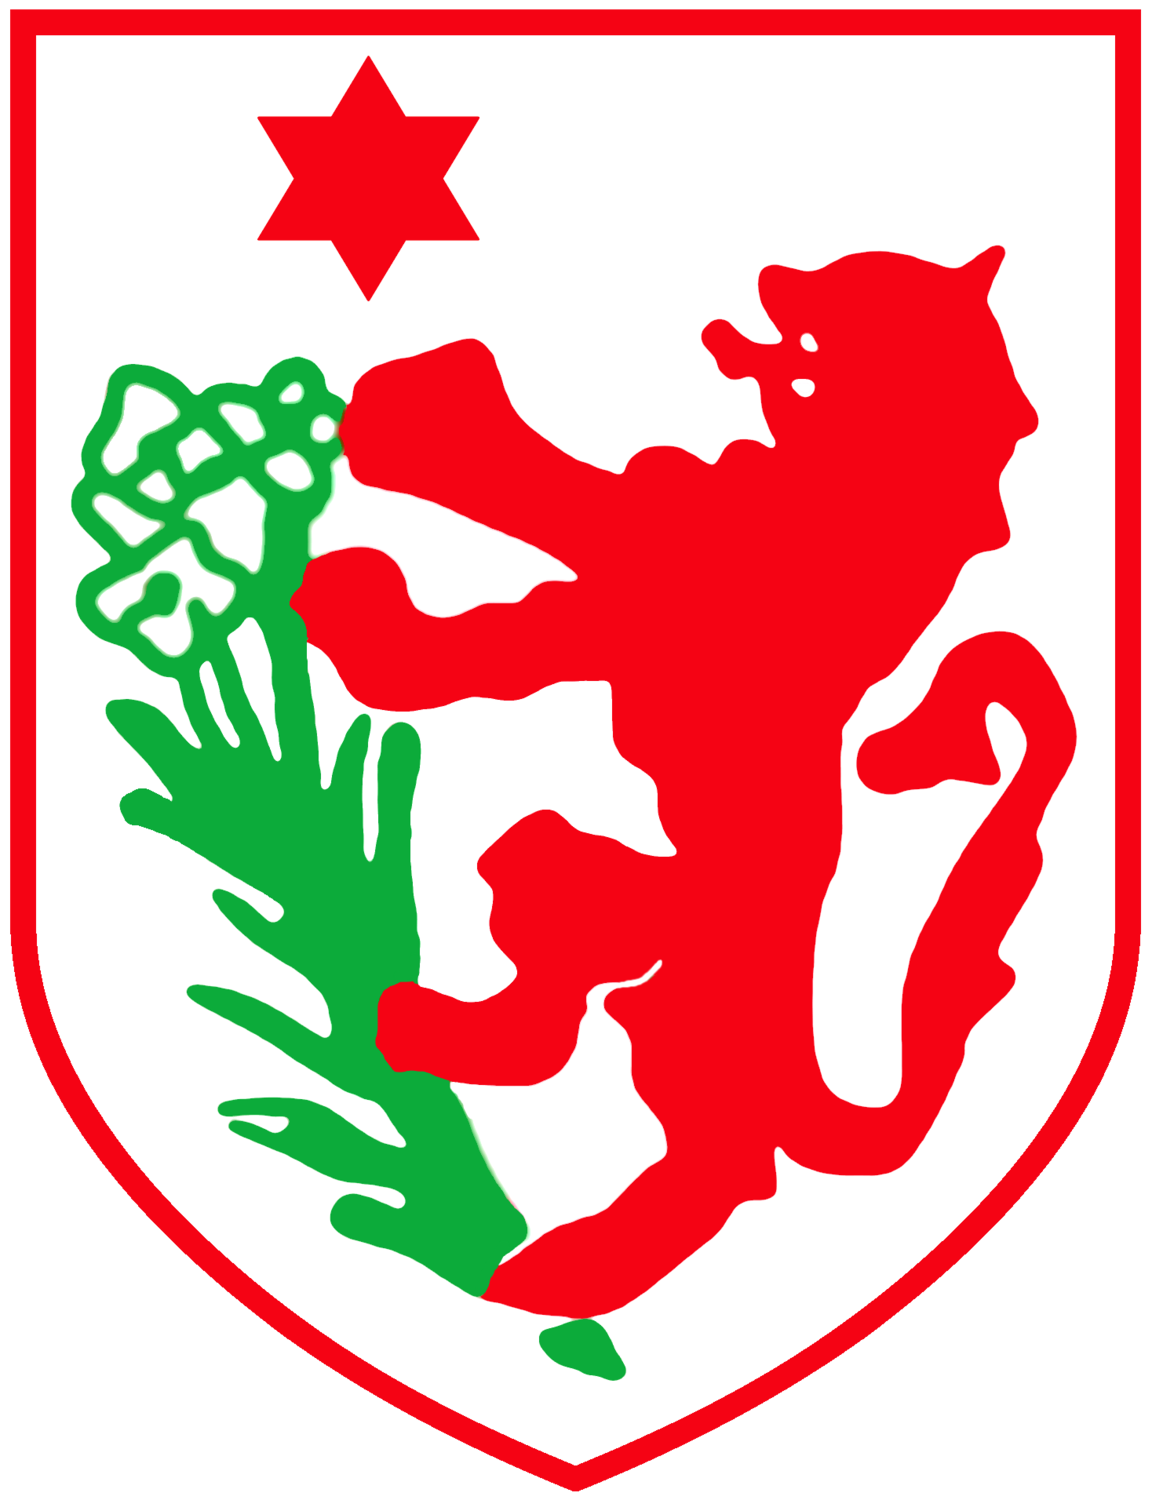 Grassina team logo